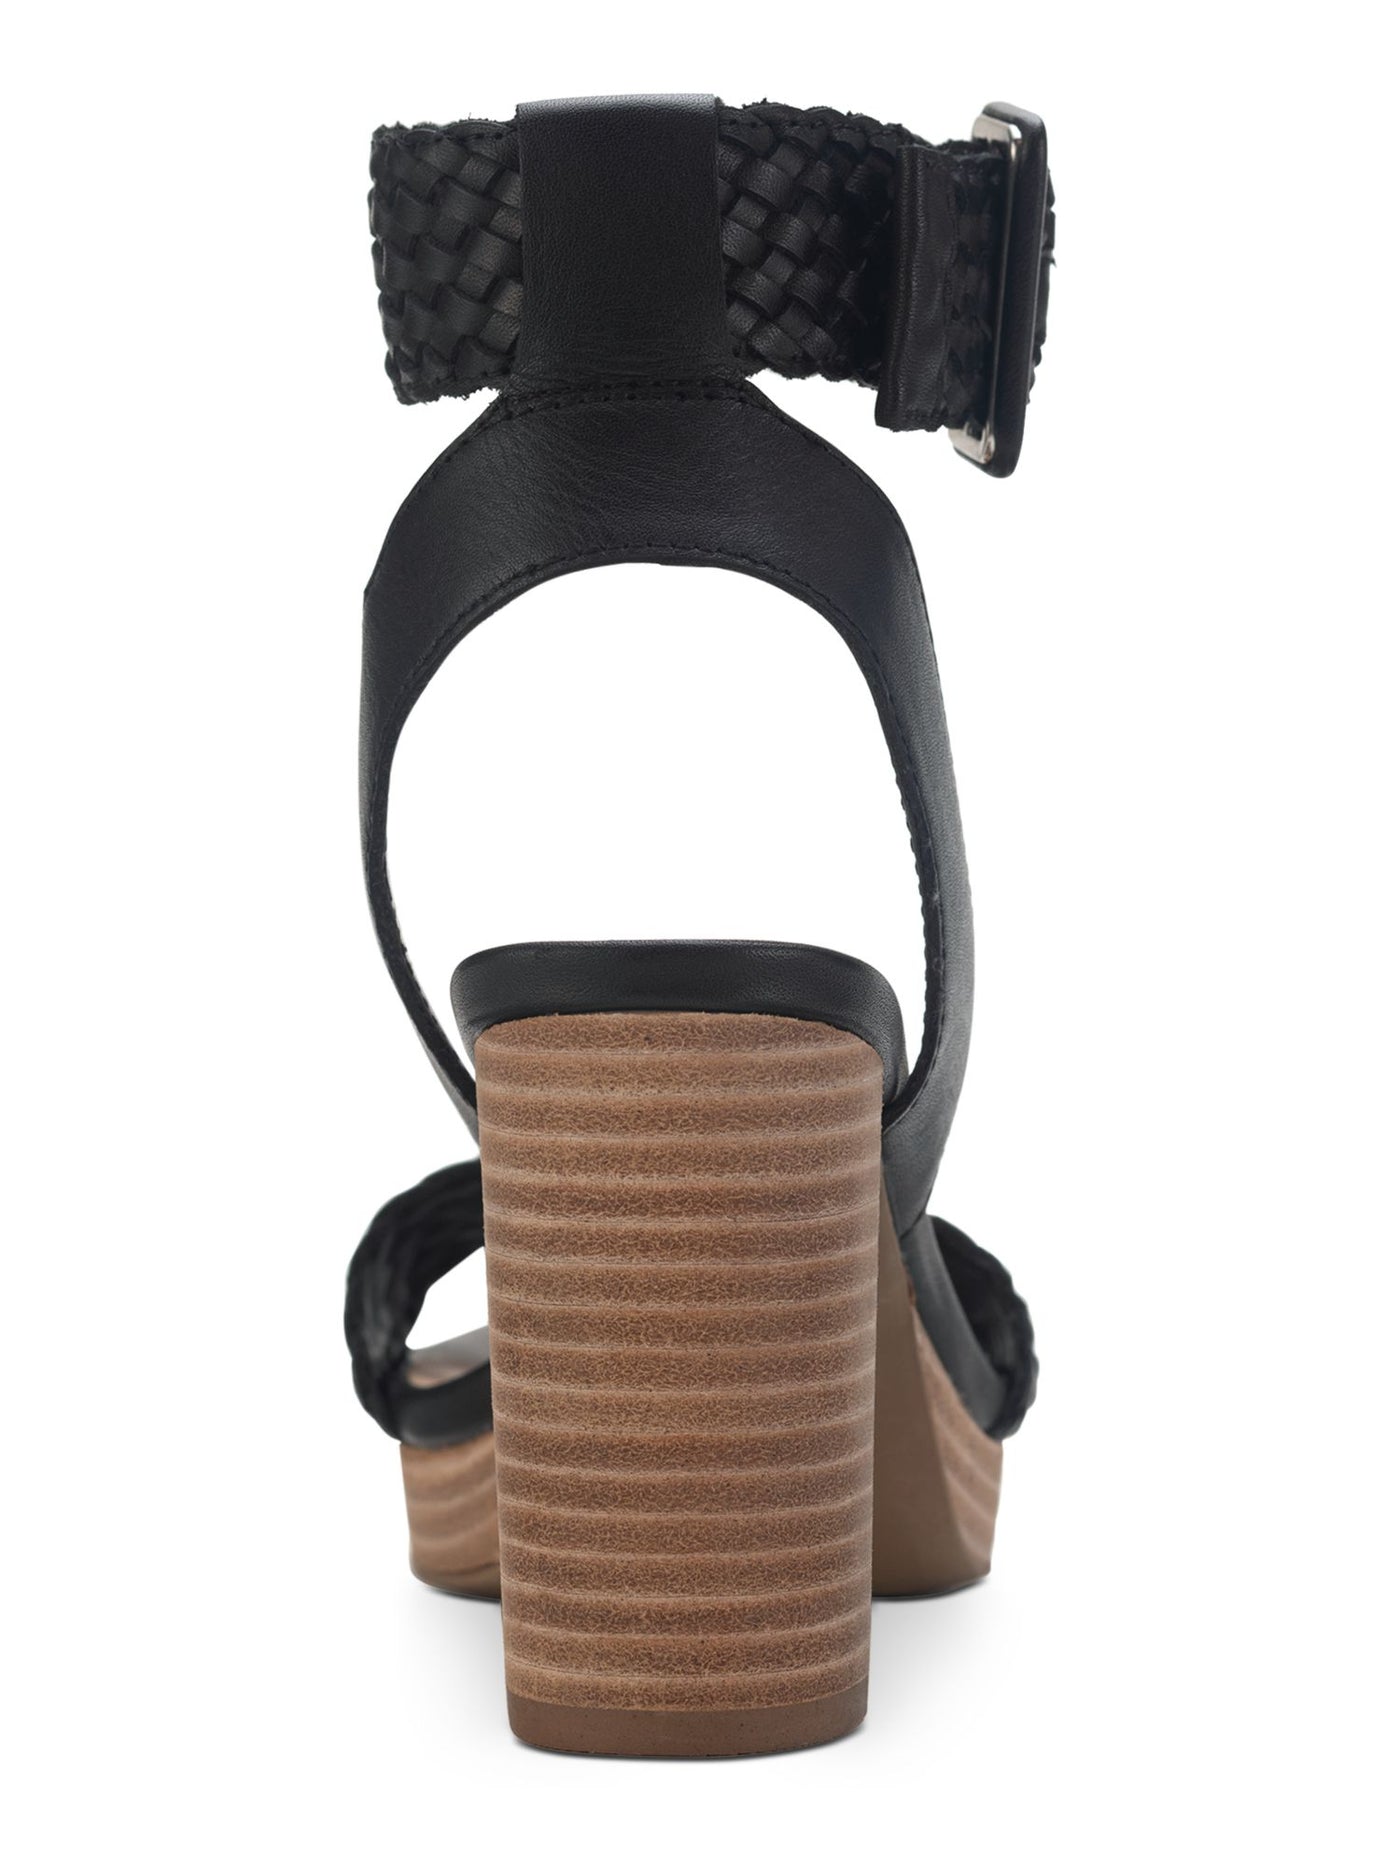 SUN STONE Womens Black Woven Ankle Strap 1/2" Platform Slip Resistant Cushioned Stefani Round Toe Block Heel Buckle Leather Dress Sandals Shoes 7 M